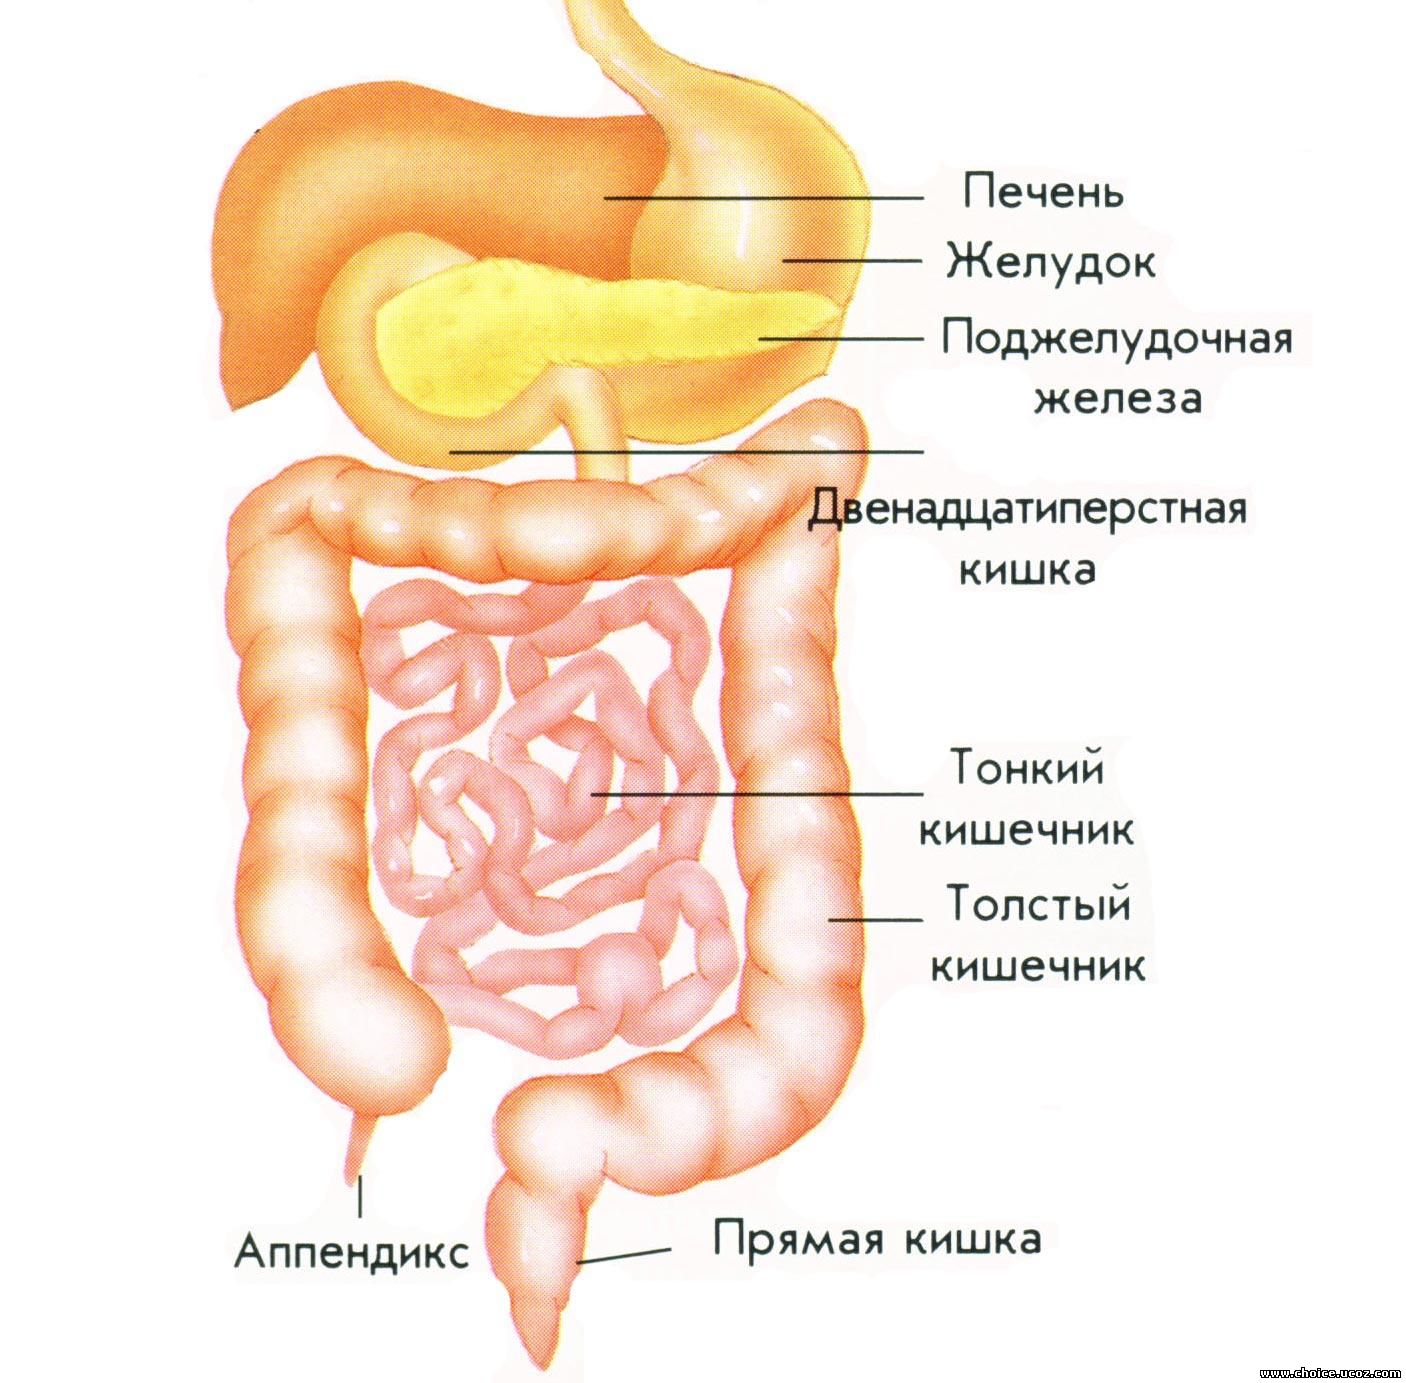 Желудок под печенью. Желудочно-кишечный тракт человека строение. Строение желудочно-кишечного тракта человека схема. Строение желудка и кишечника. Поджелудочная железа и тонкий кишечник.